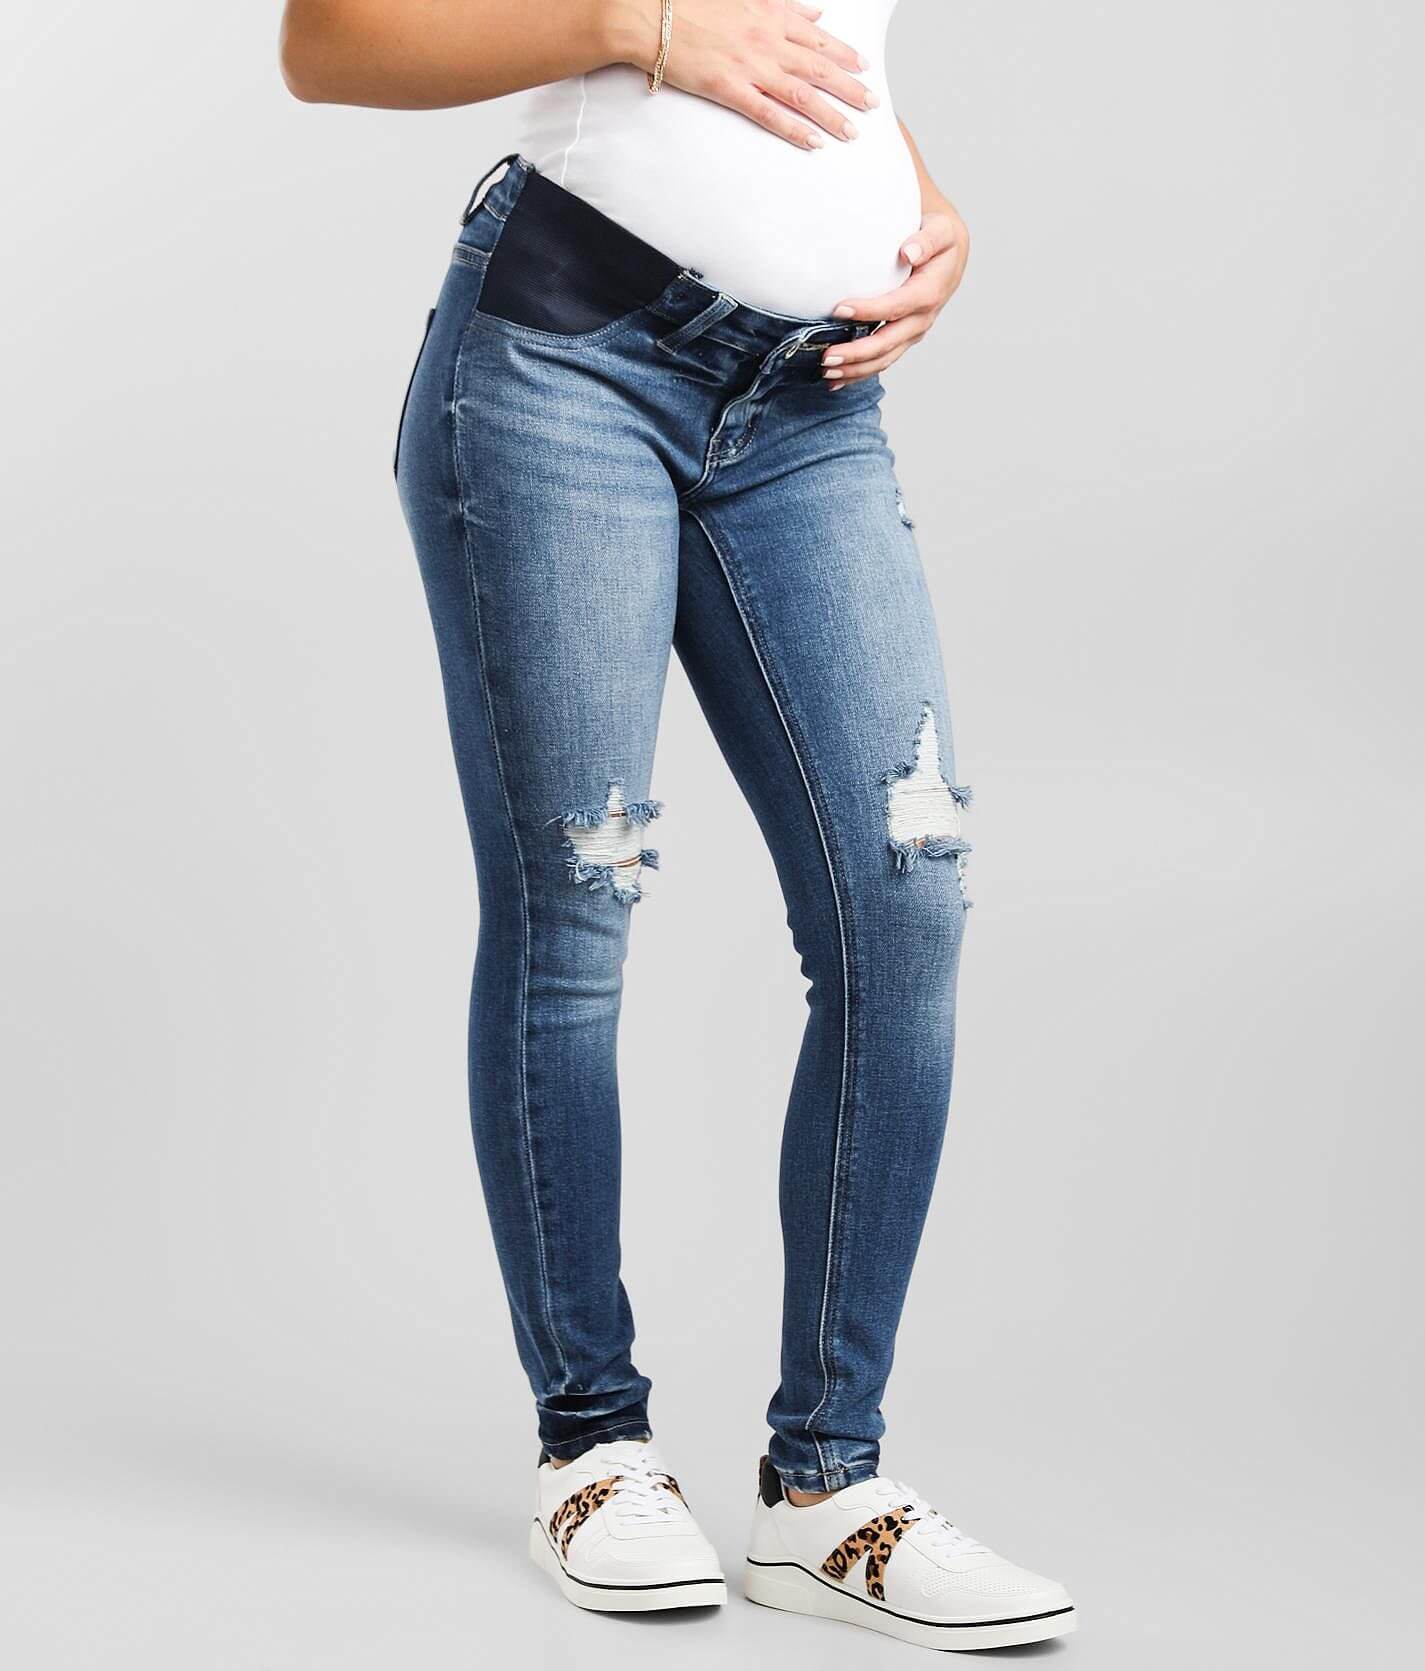 KanCan Maternity Skinny Stretch Jean - Women's Jeans in Medium